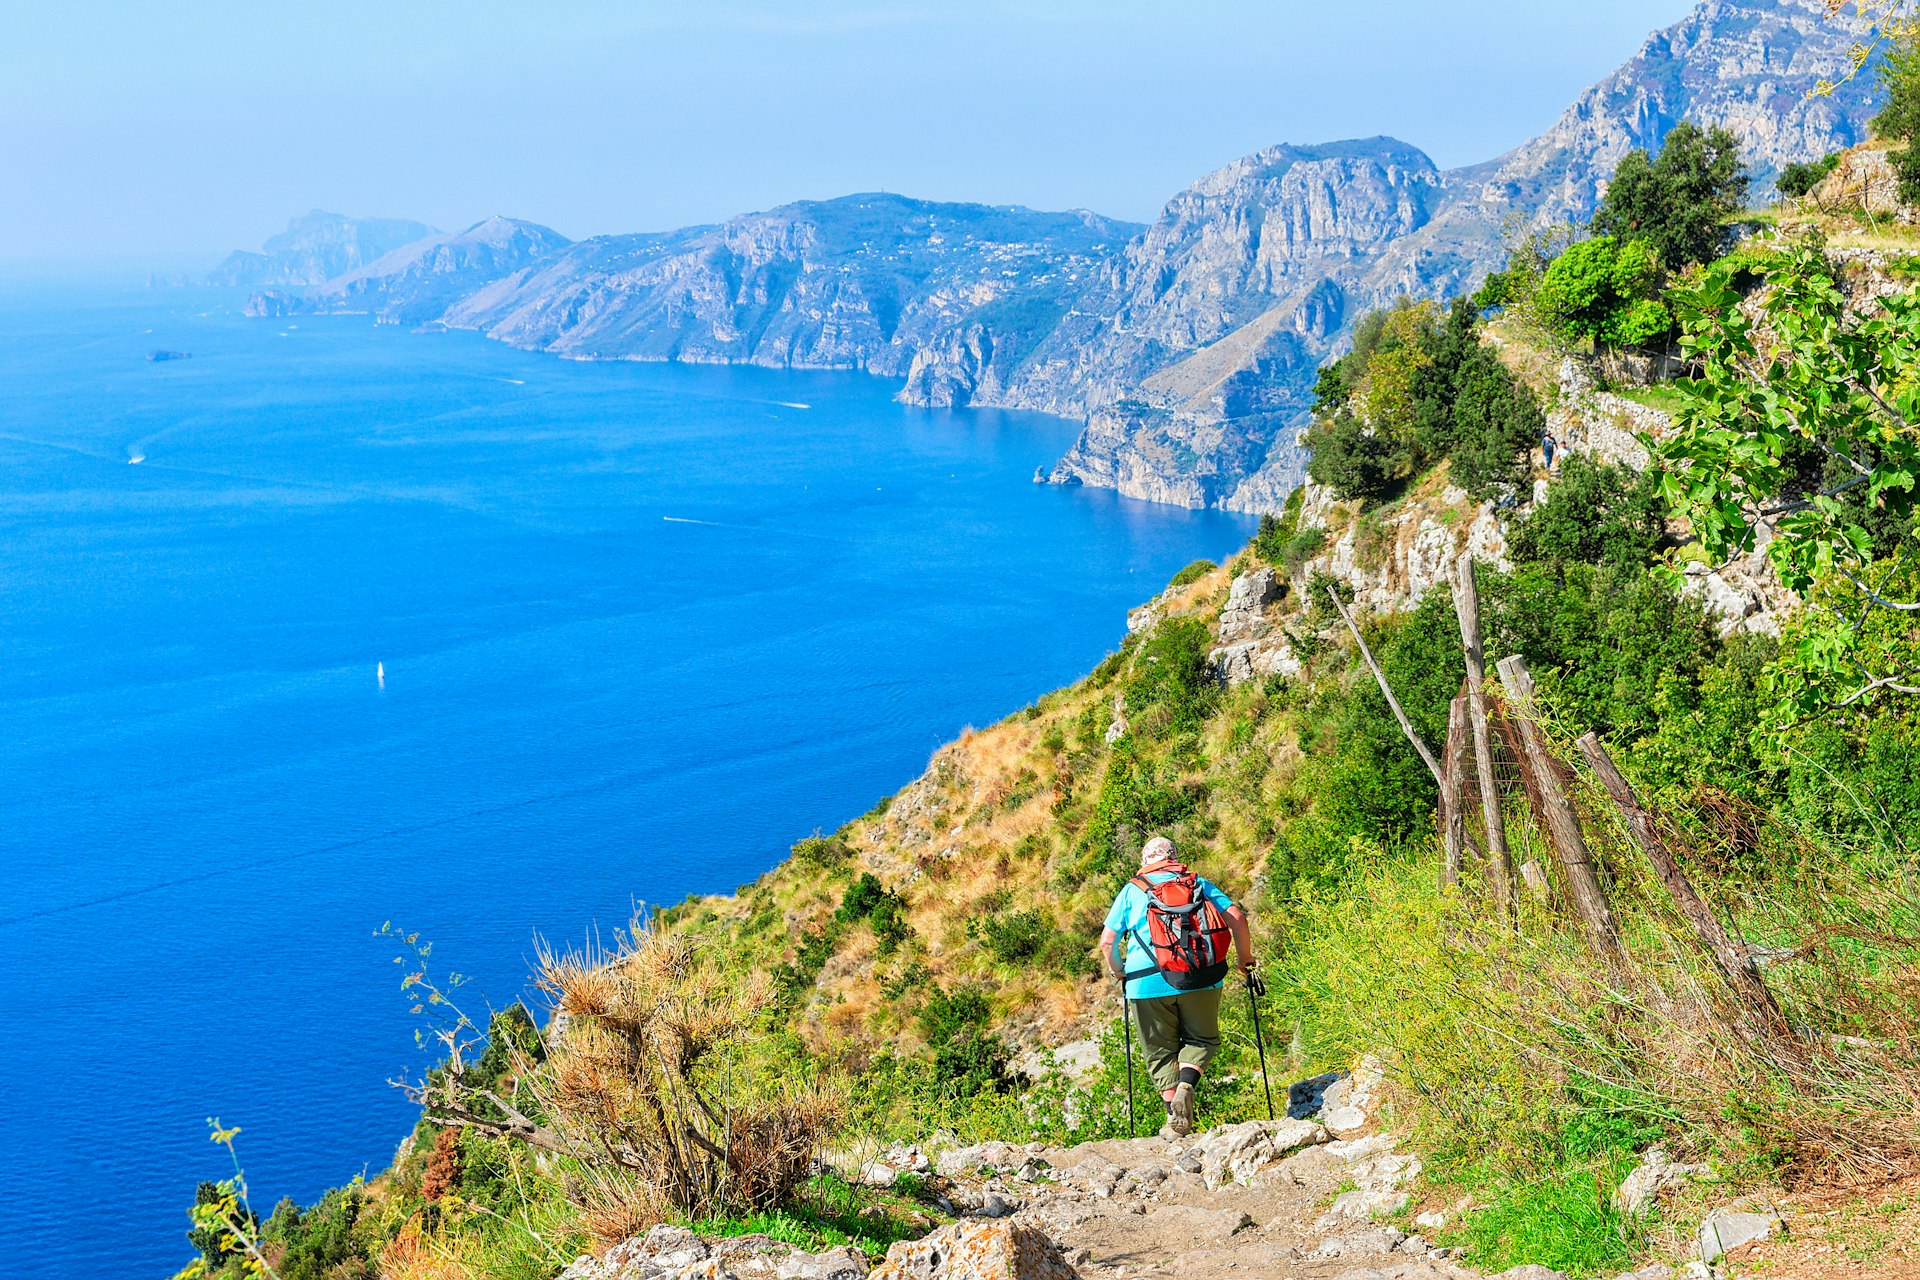 A hiker follows a coastal path with the blue ocean and green hills